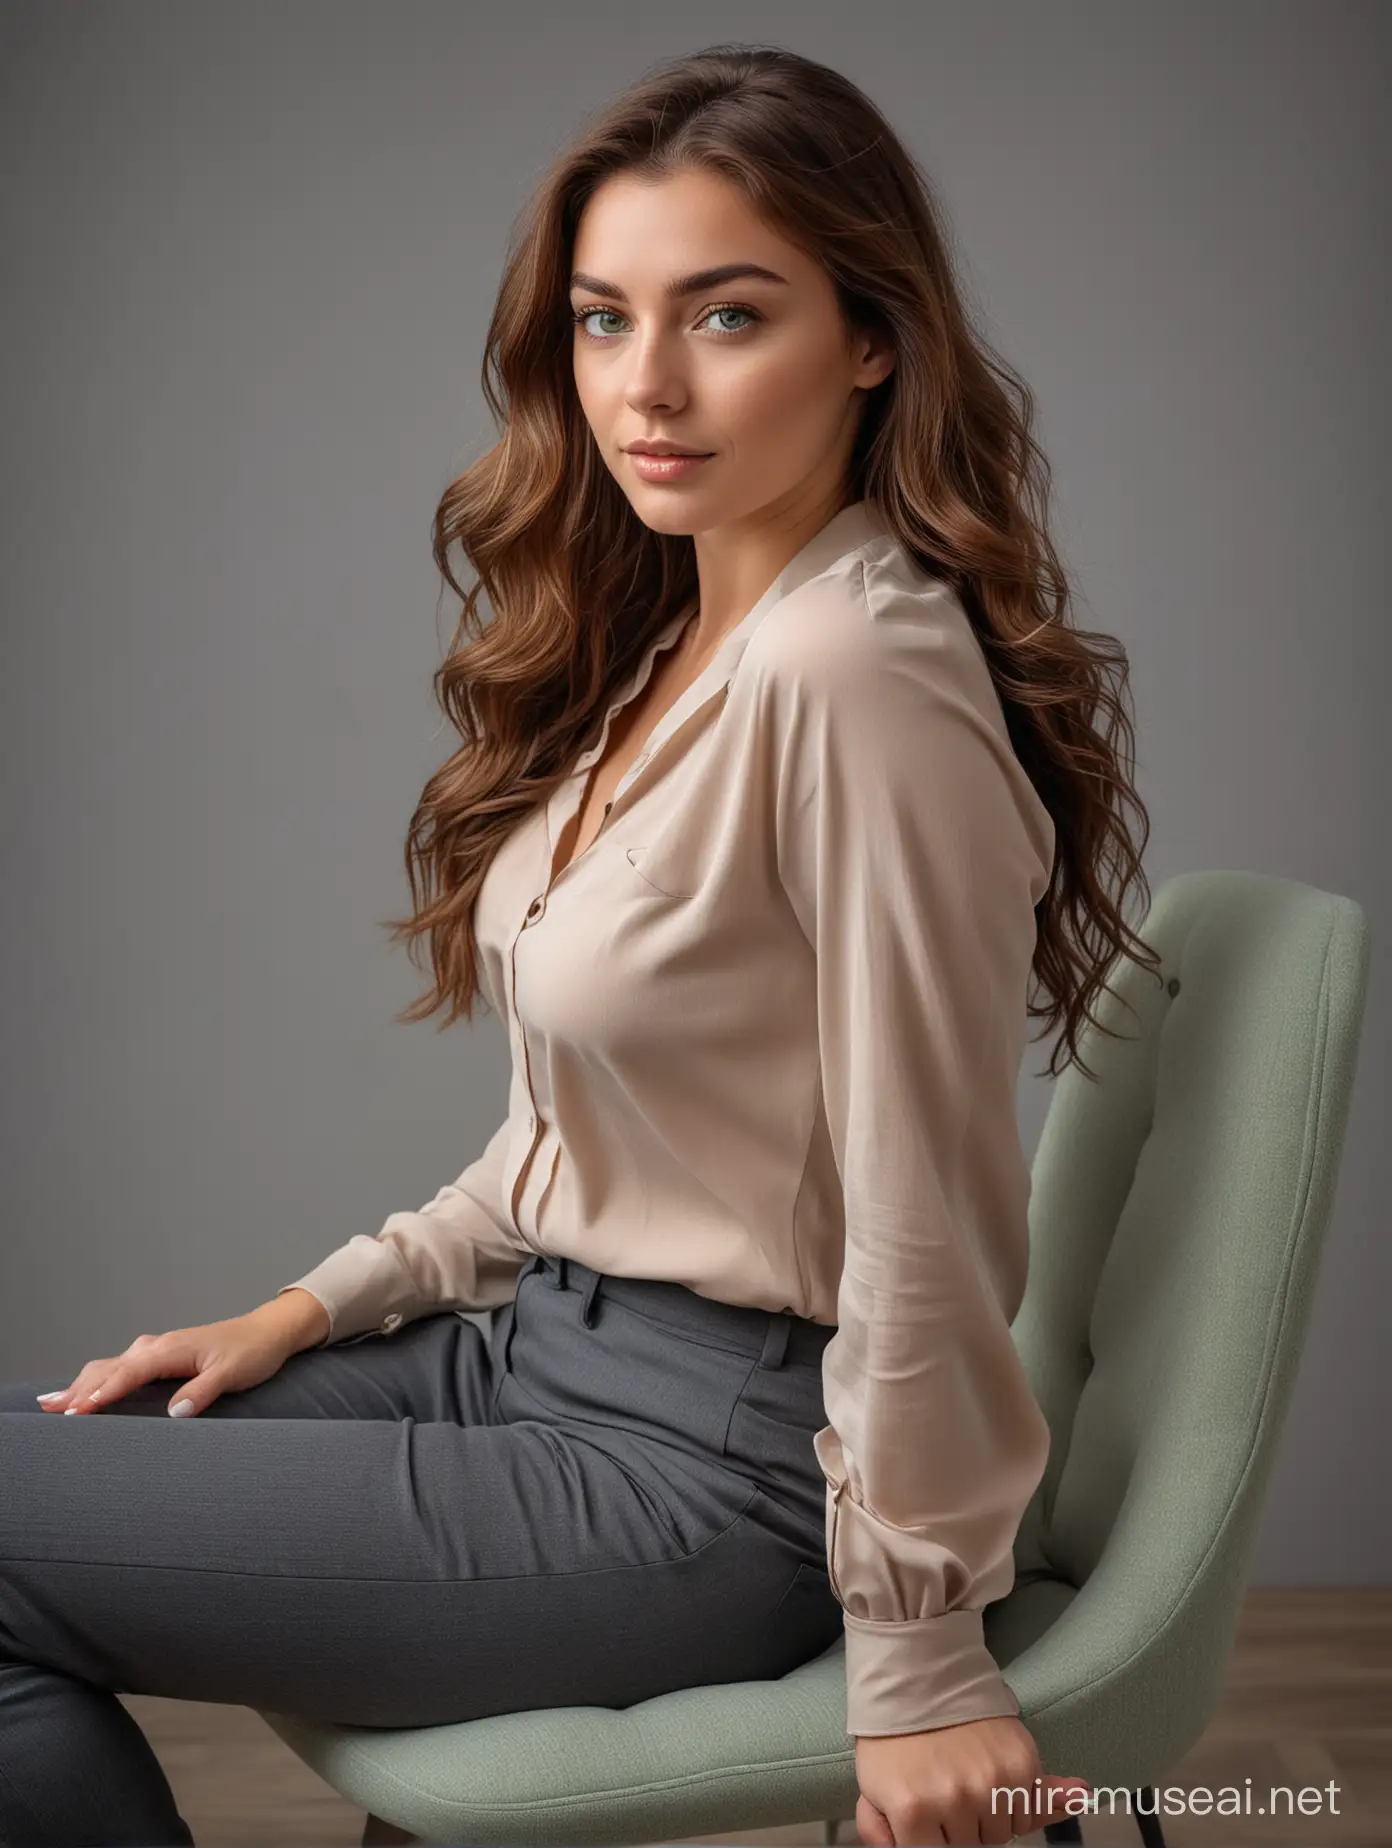 Professional Businesswoman Sitting on Chair Unretouched Portrait